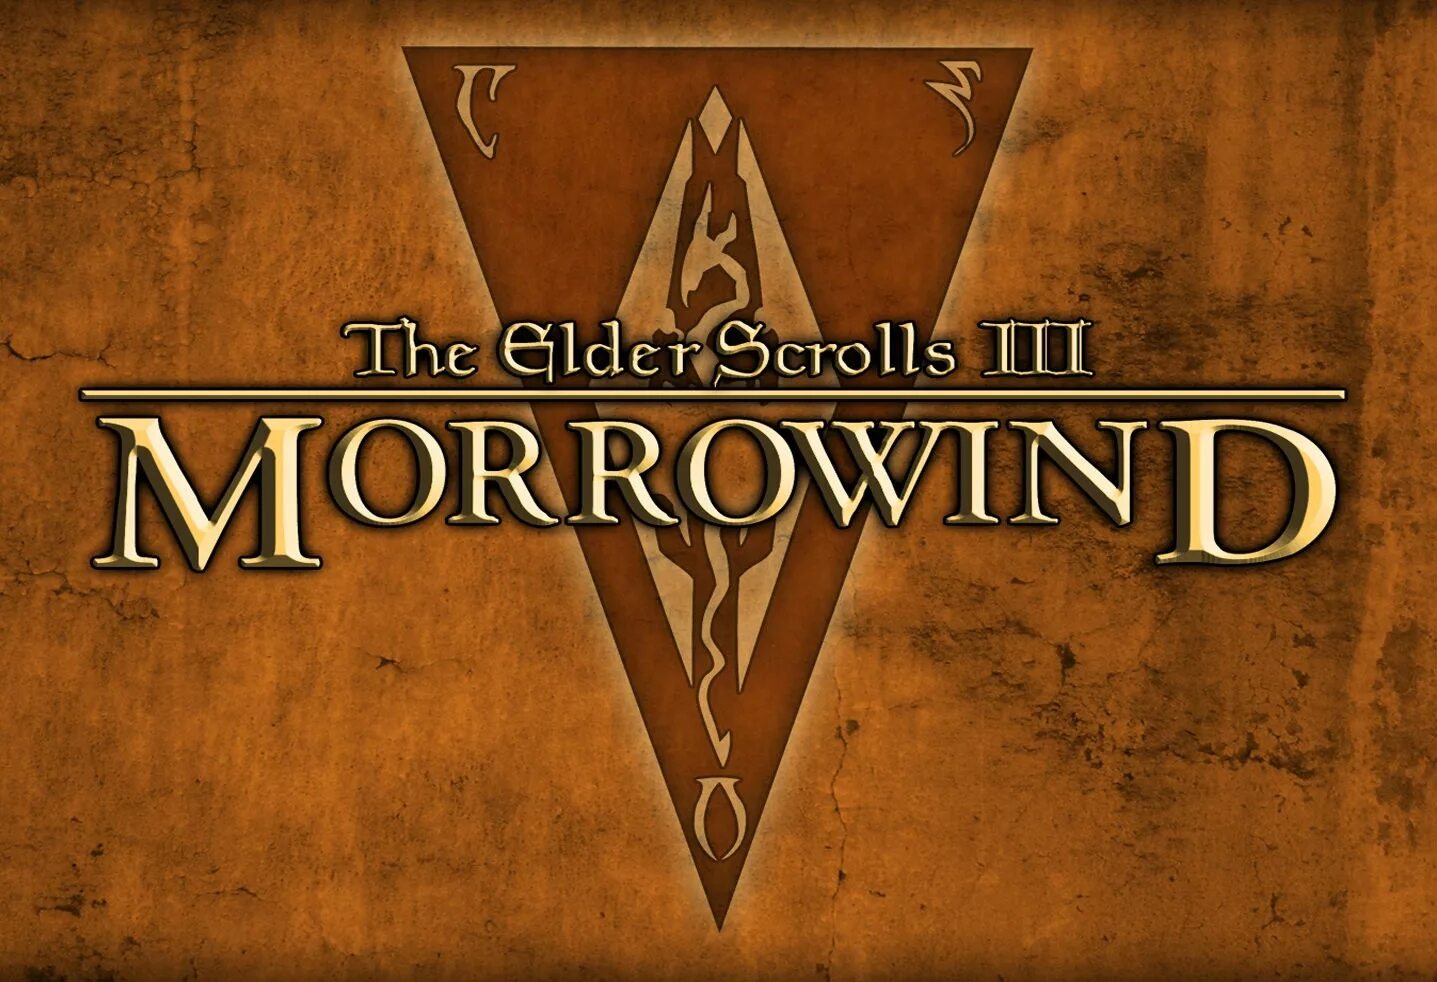 The elder scrolls morrowind. The Elder Scrolls 3 Morrowind Постер. Плакат Morrowind tes. Тес 3 морровинд обложка. Elder Scrolls 3 Morrowind обложка.